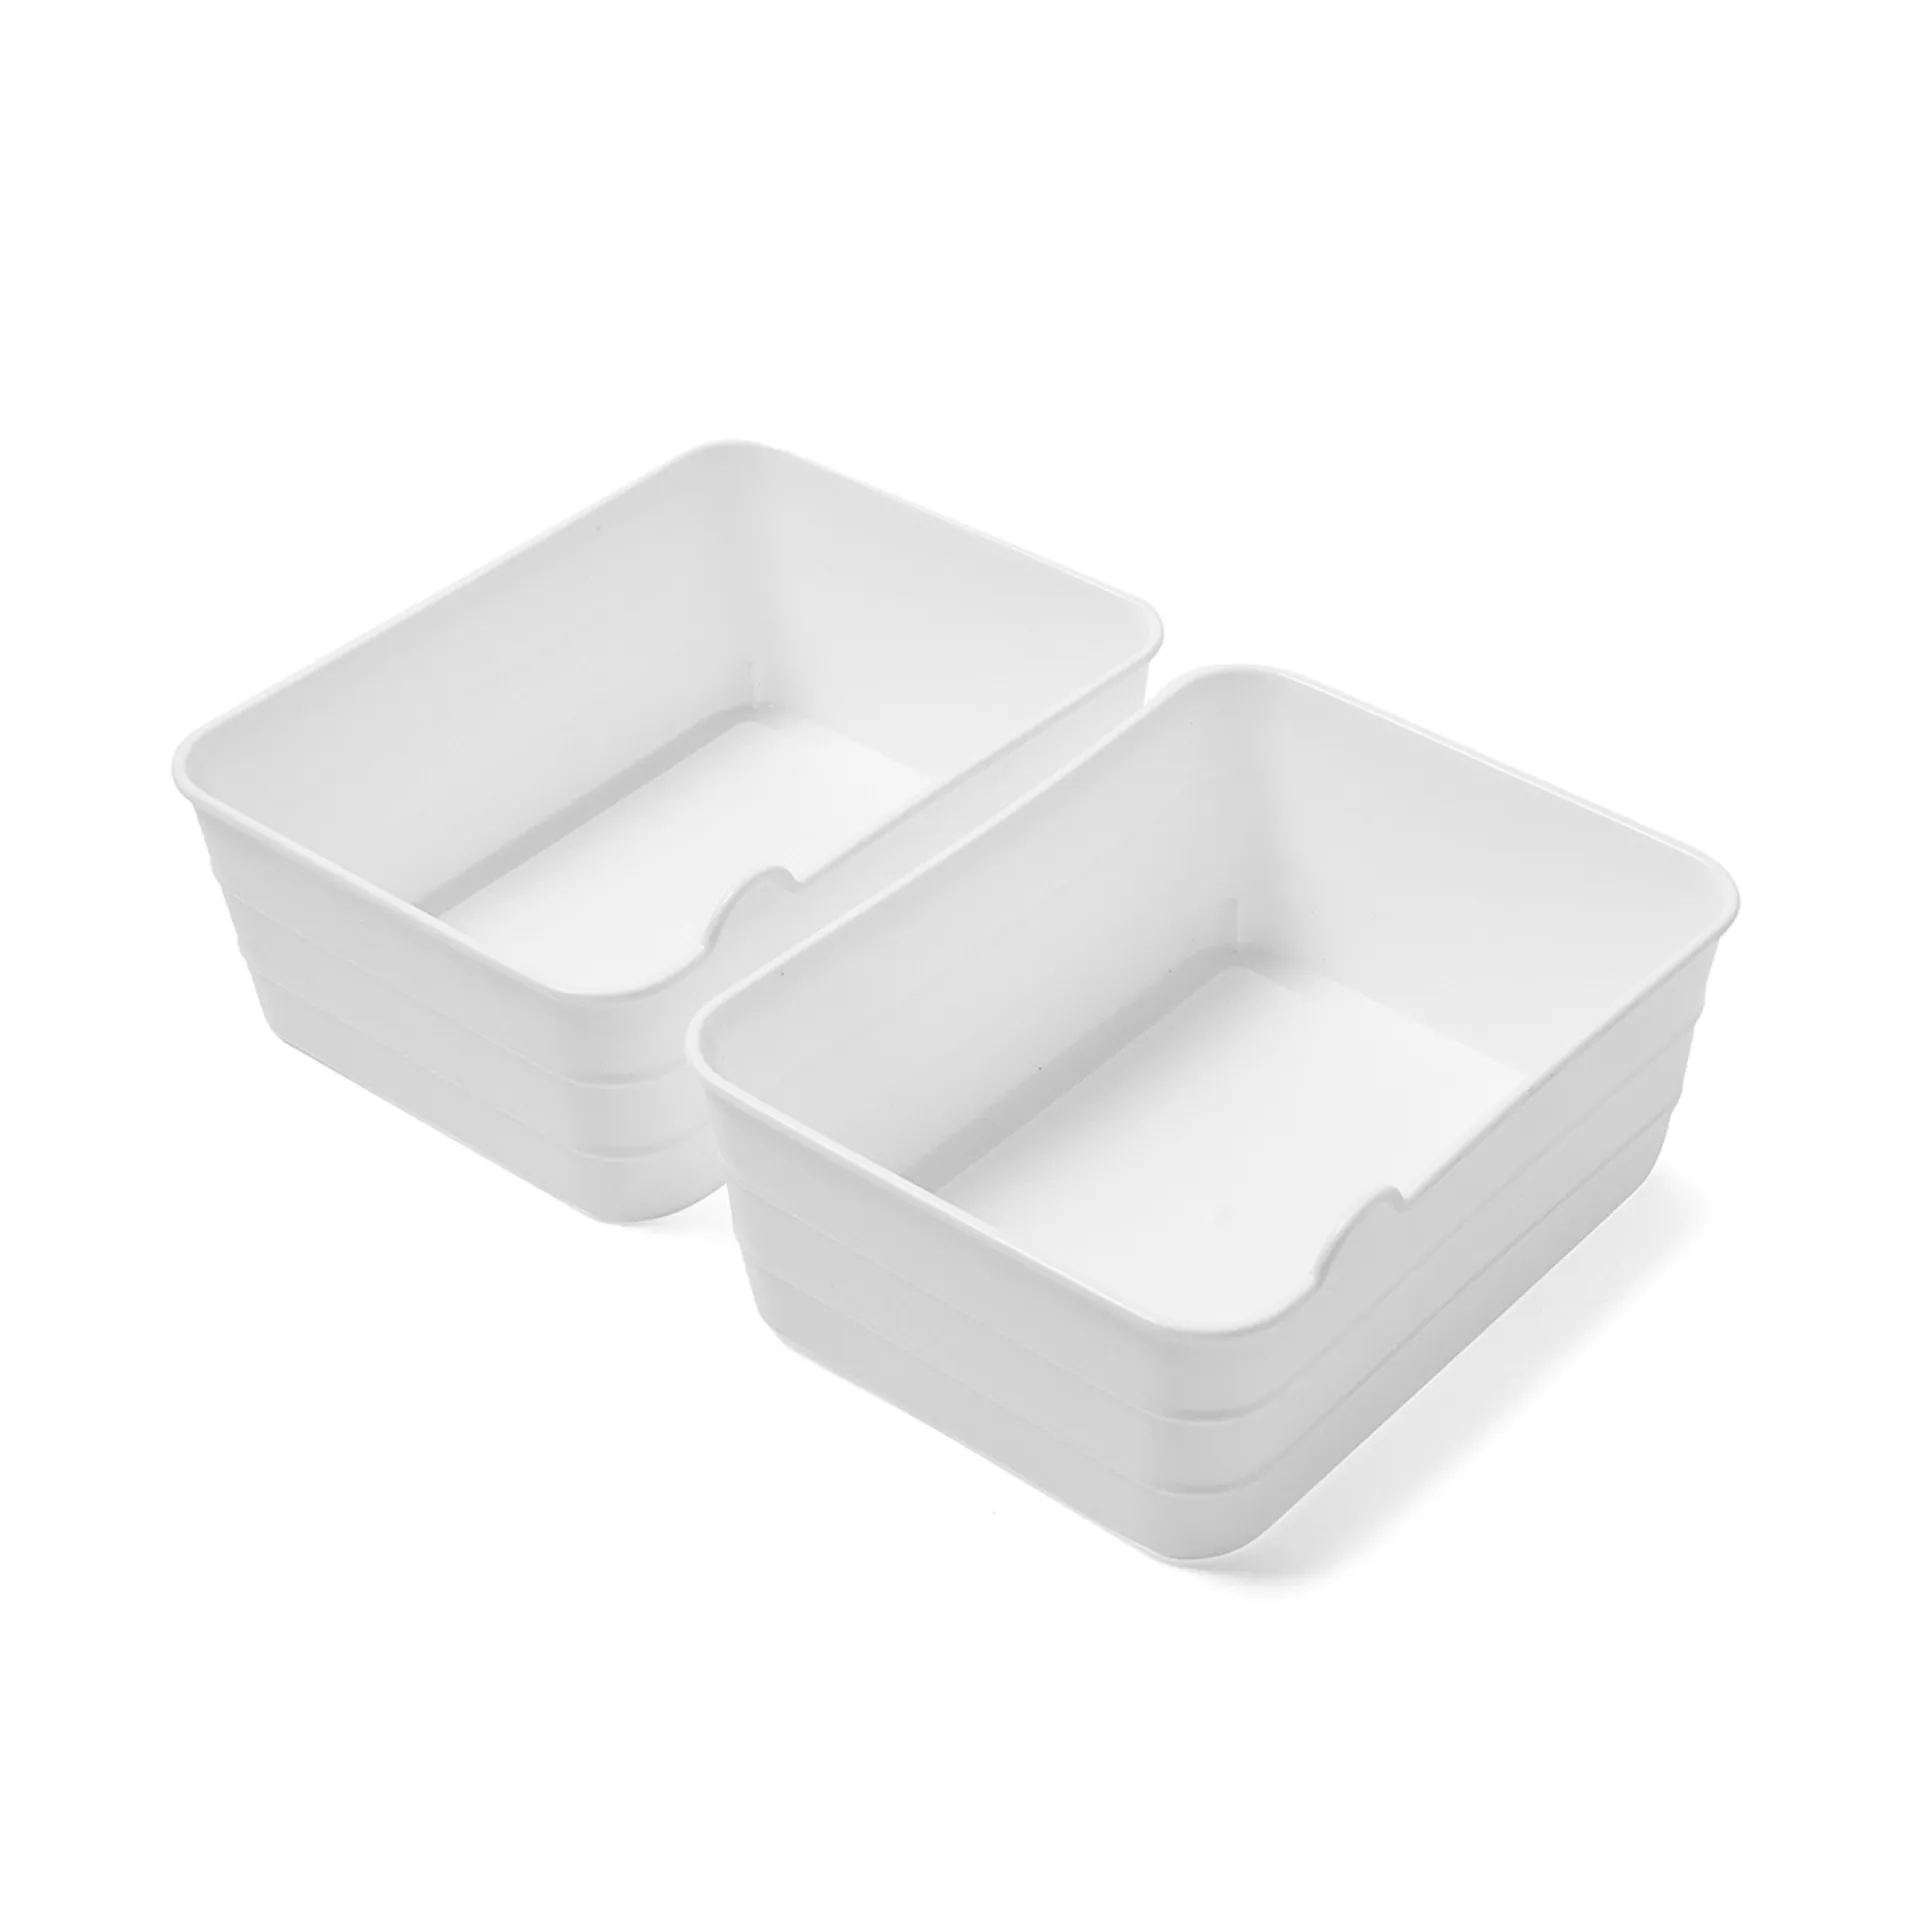 2 Pack Medium Flexi Trays - White